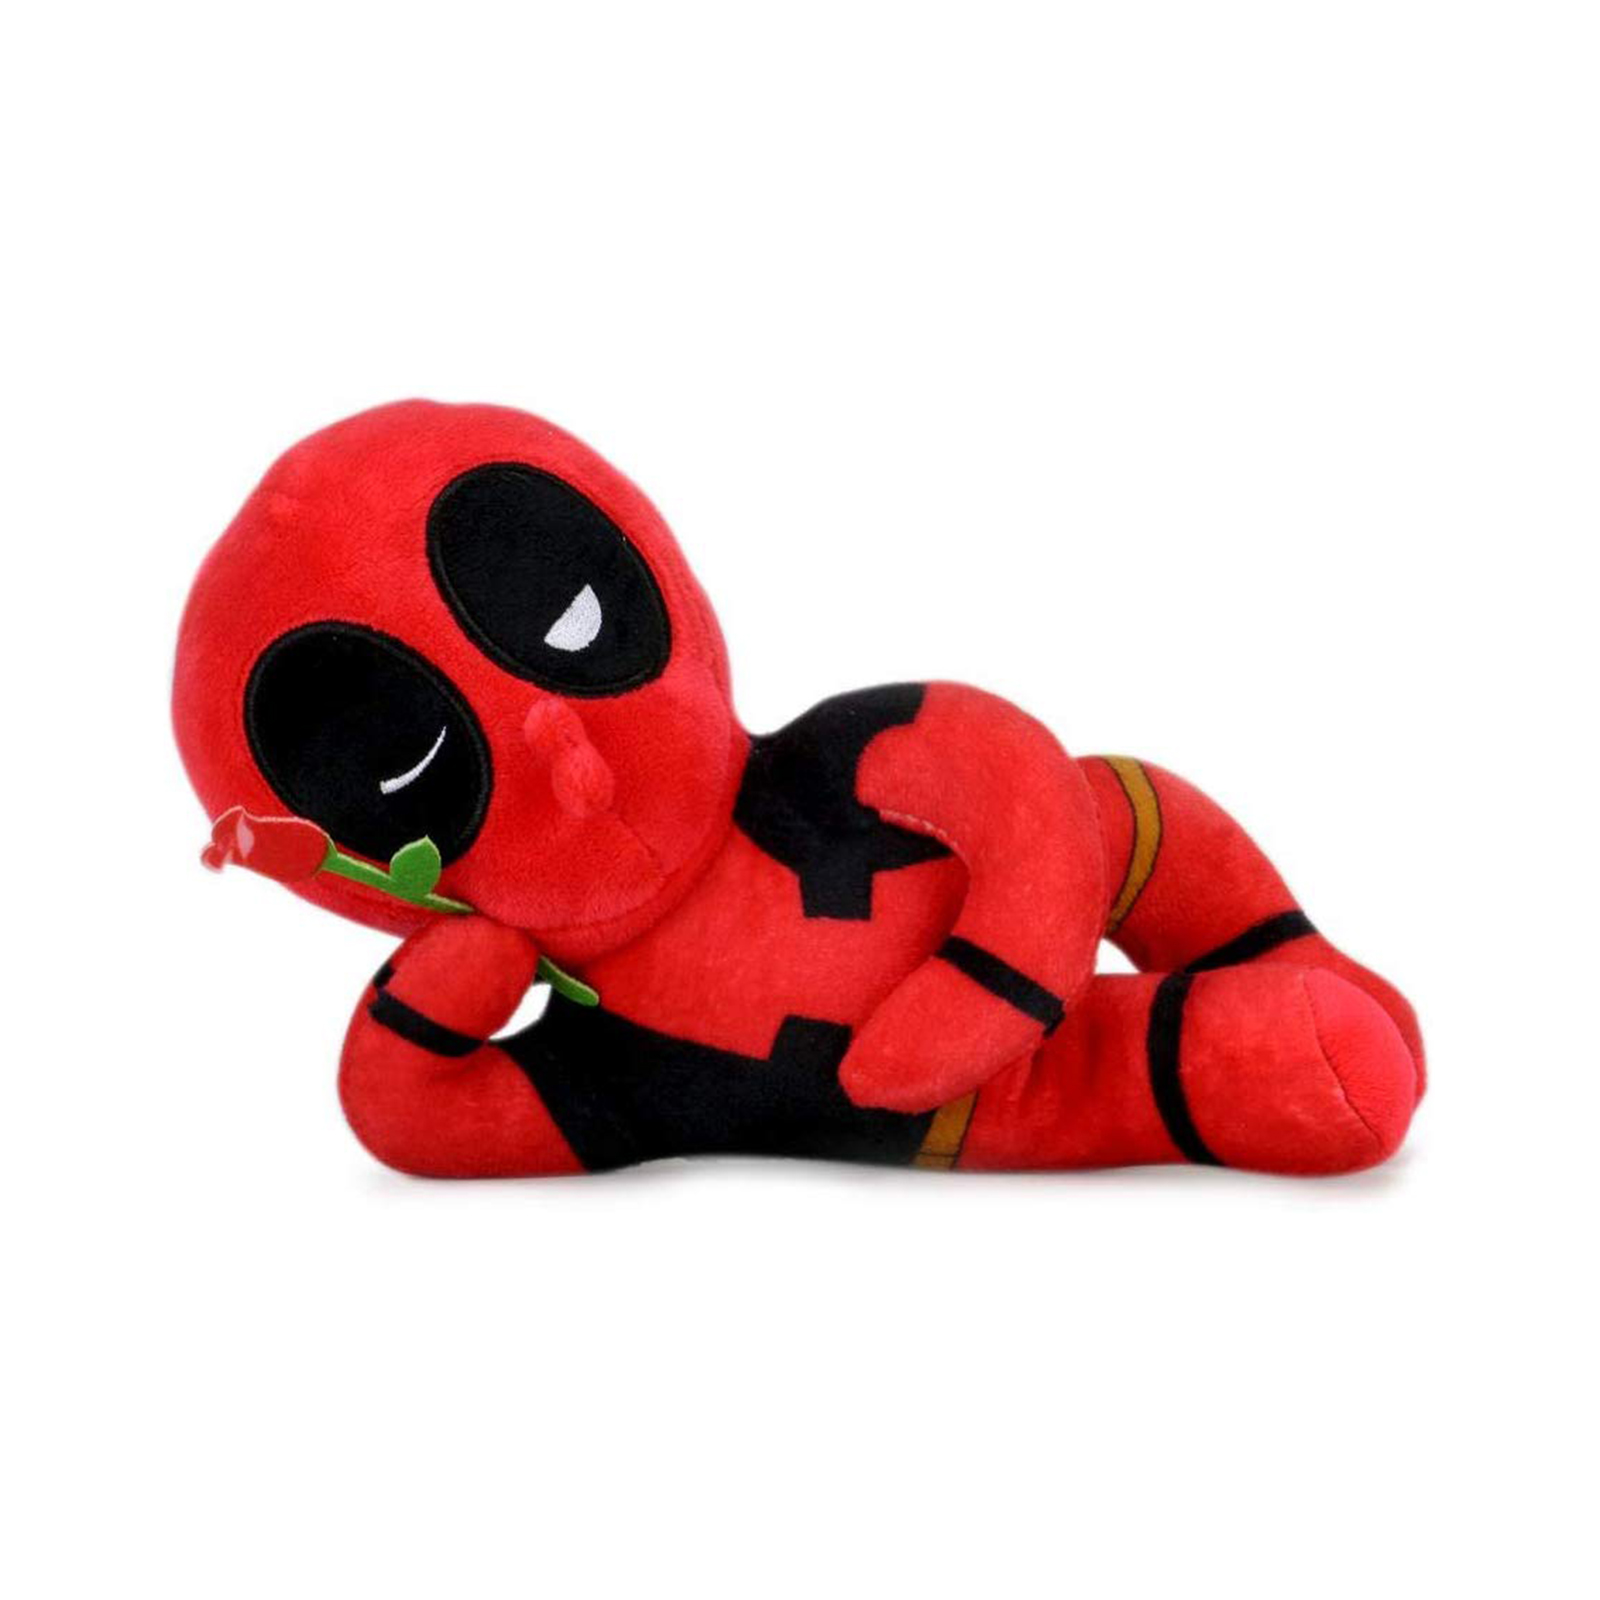 8/" Marvel Plush Deadpool Movie Video Game Comics Character Stuffed Animal Toy